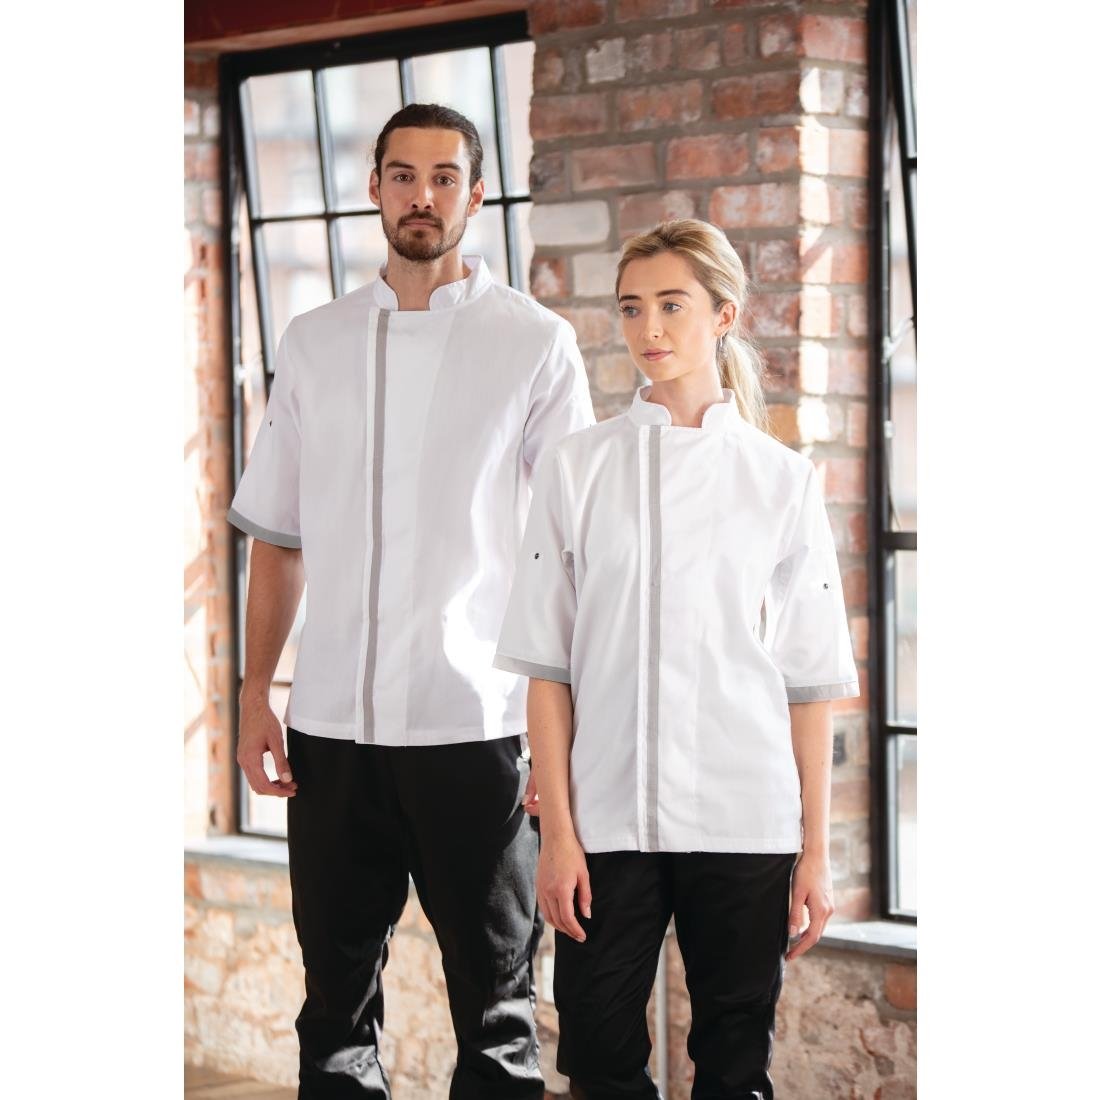 B998-XXL Southside Unisex Chefs Jacket Short Sleeve White 2XL JD Catering Equipment Solutions Ltd